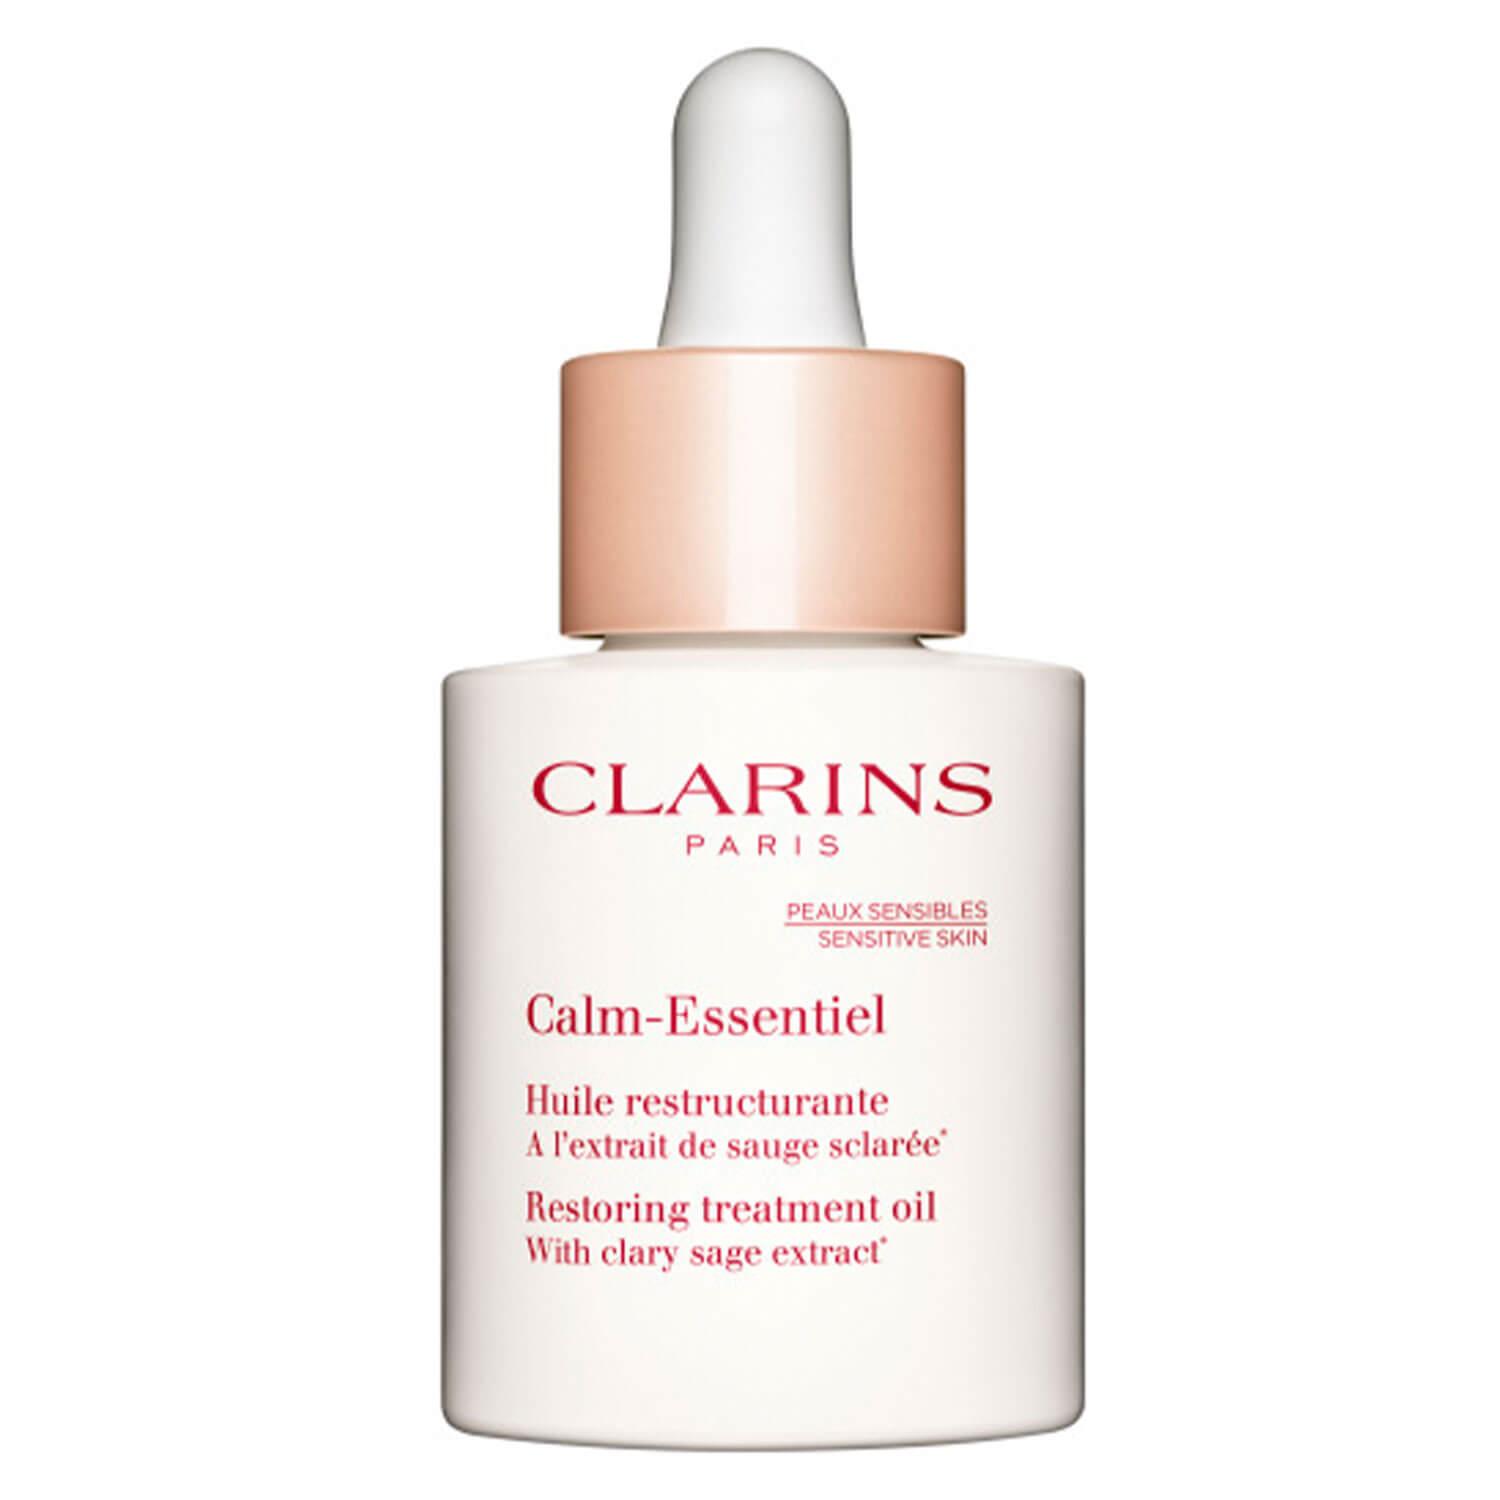 Clarins Skin - Huile Restructurante Calm-Essentiel